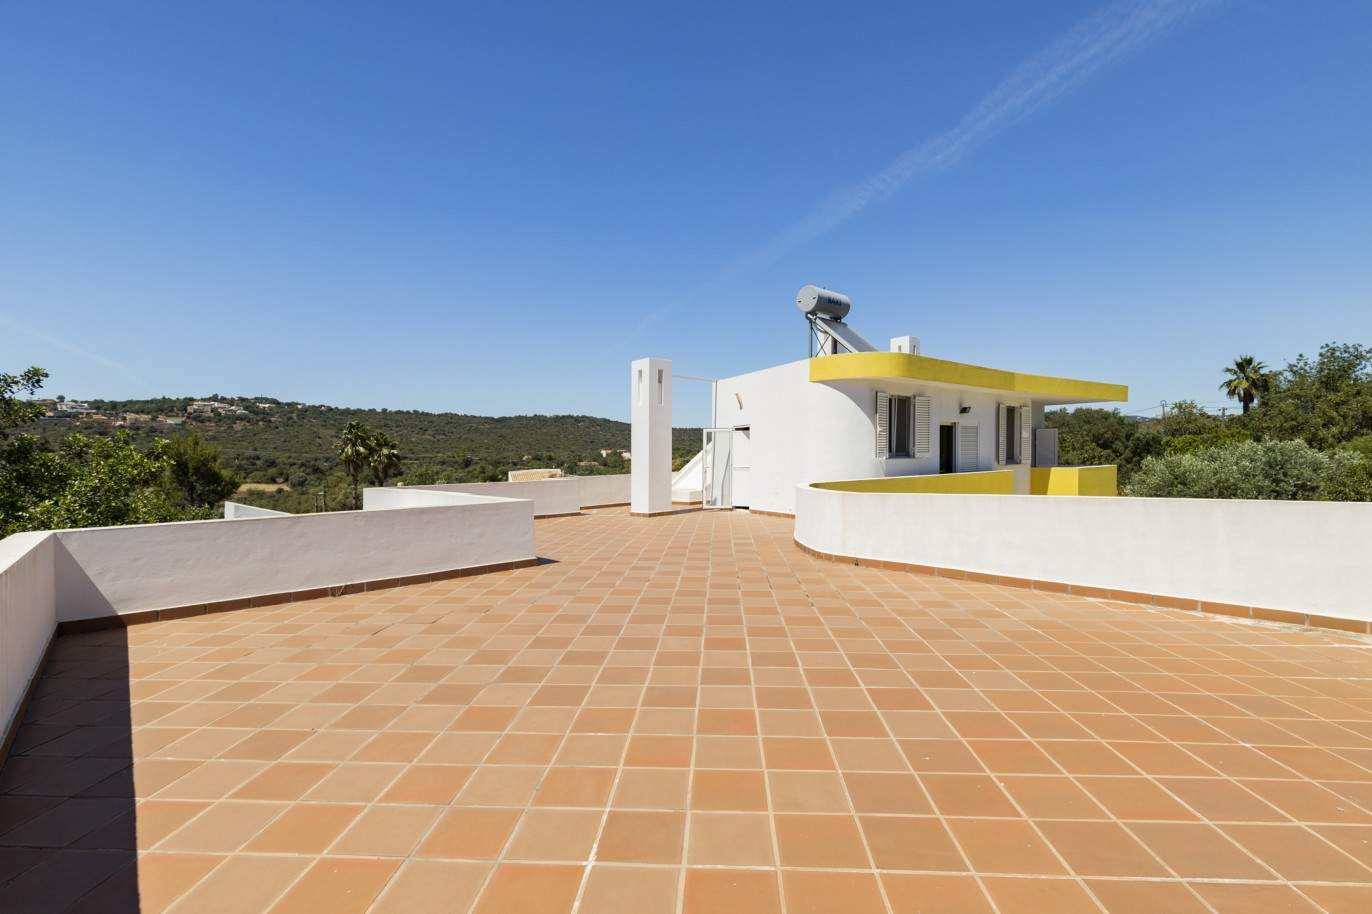 4 Bedroom Villa with pool, for sale in Loulé, Algarve_201307